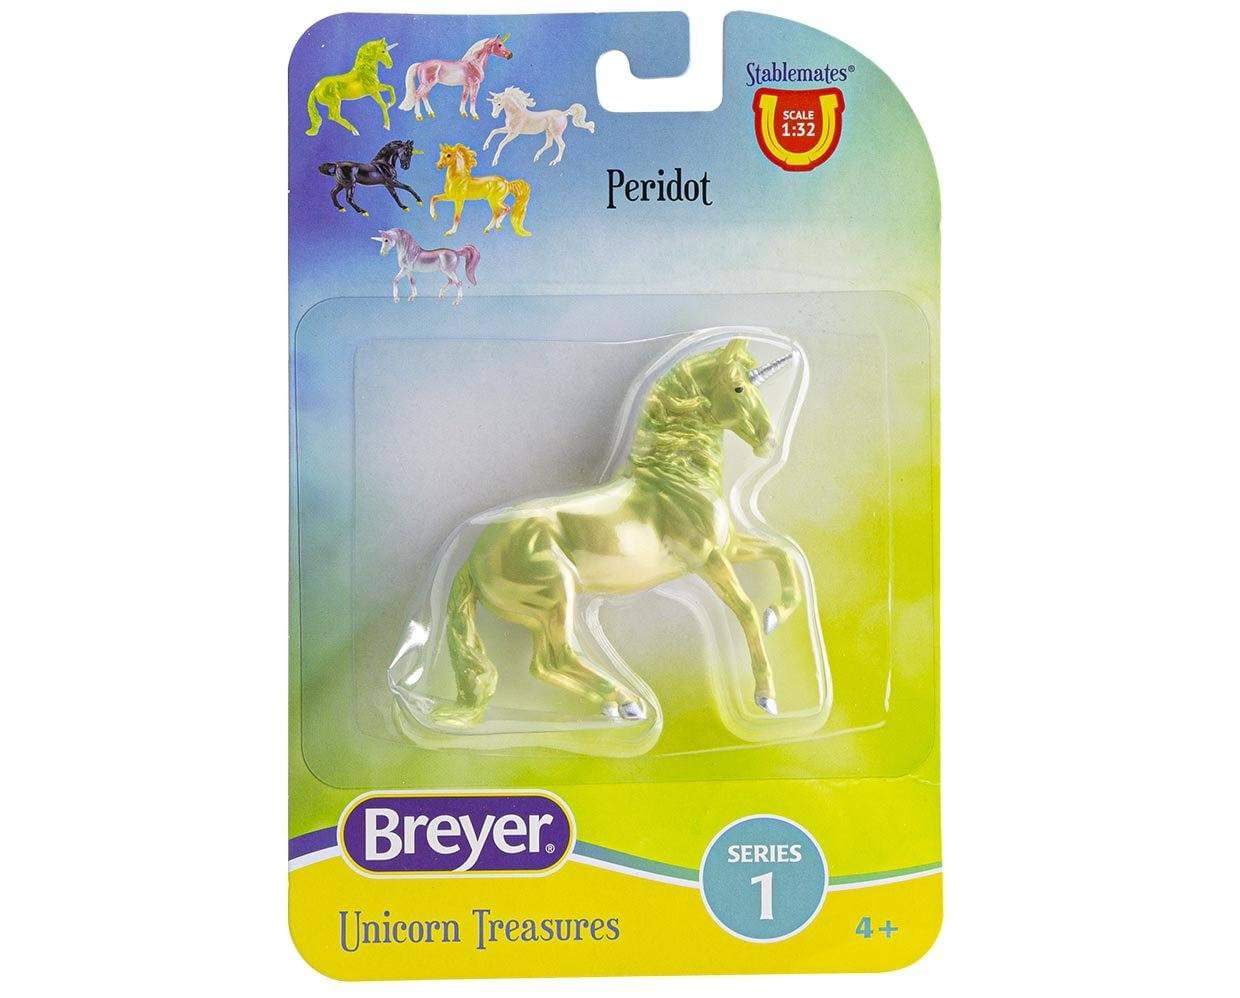 Breyer Unicorn Treasures 1:32 Scale Model Horse | Peridot